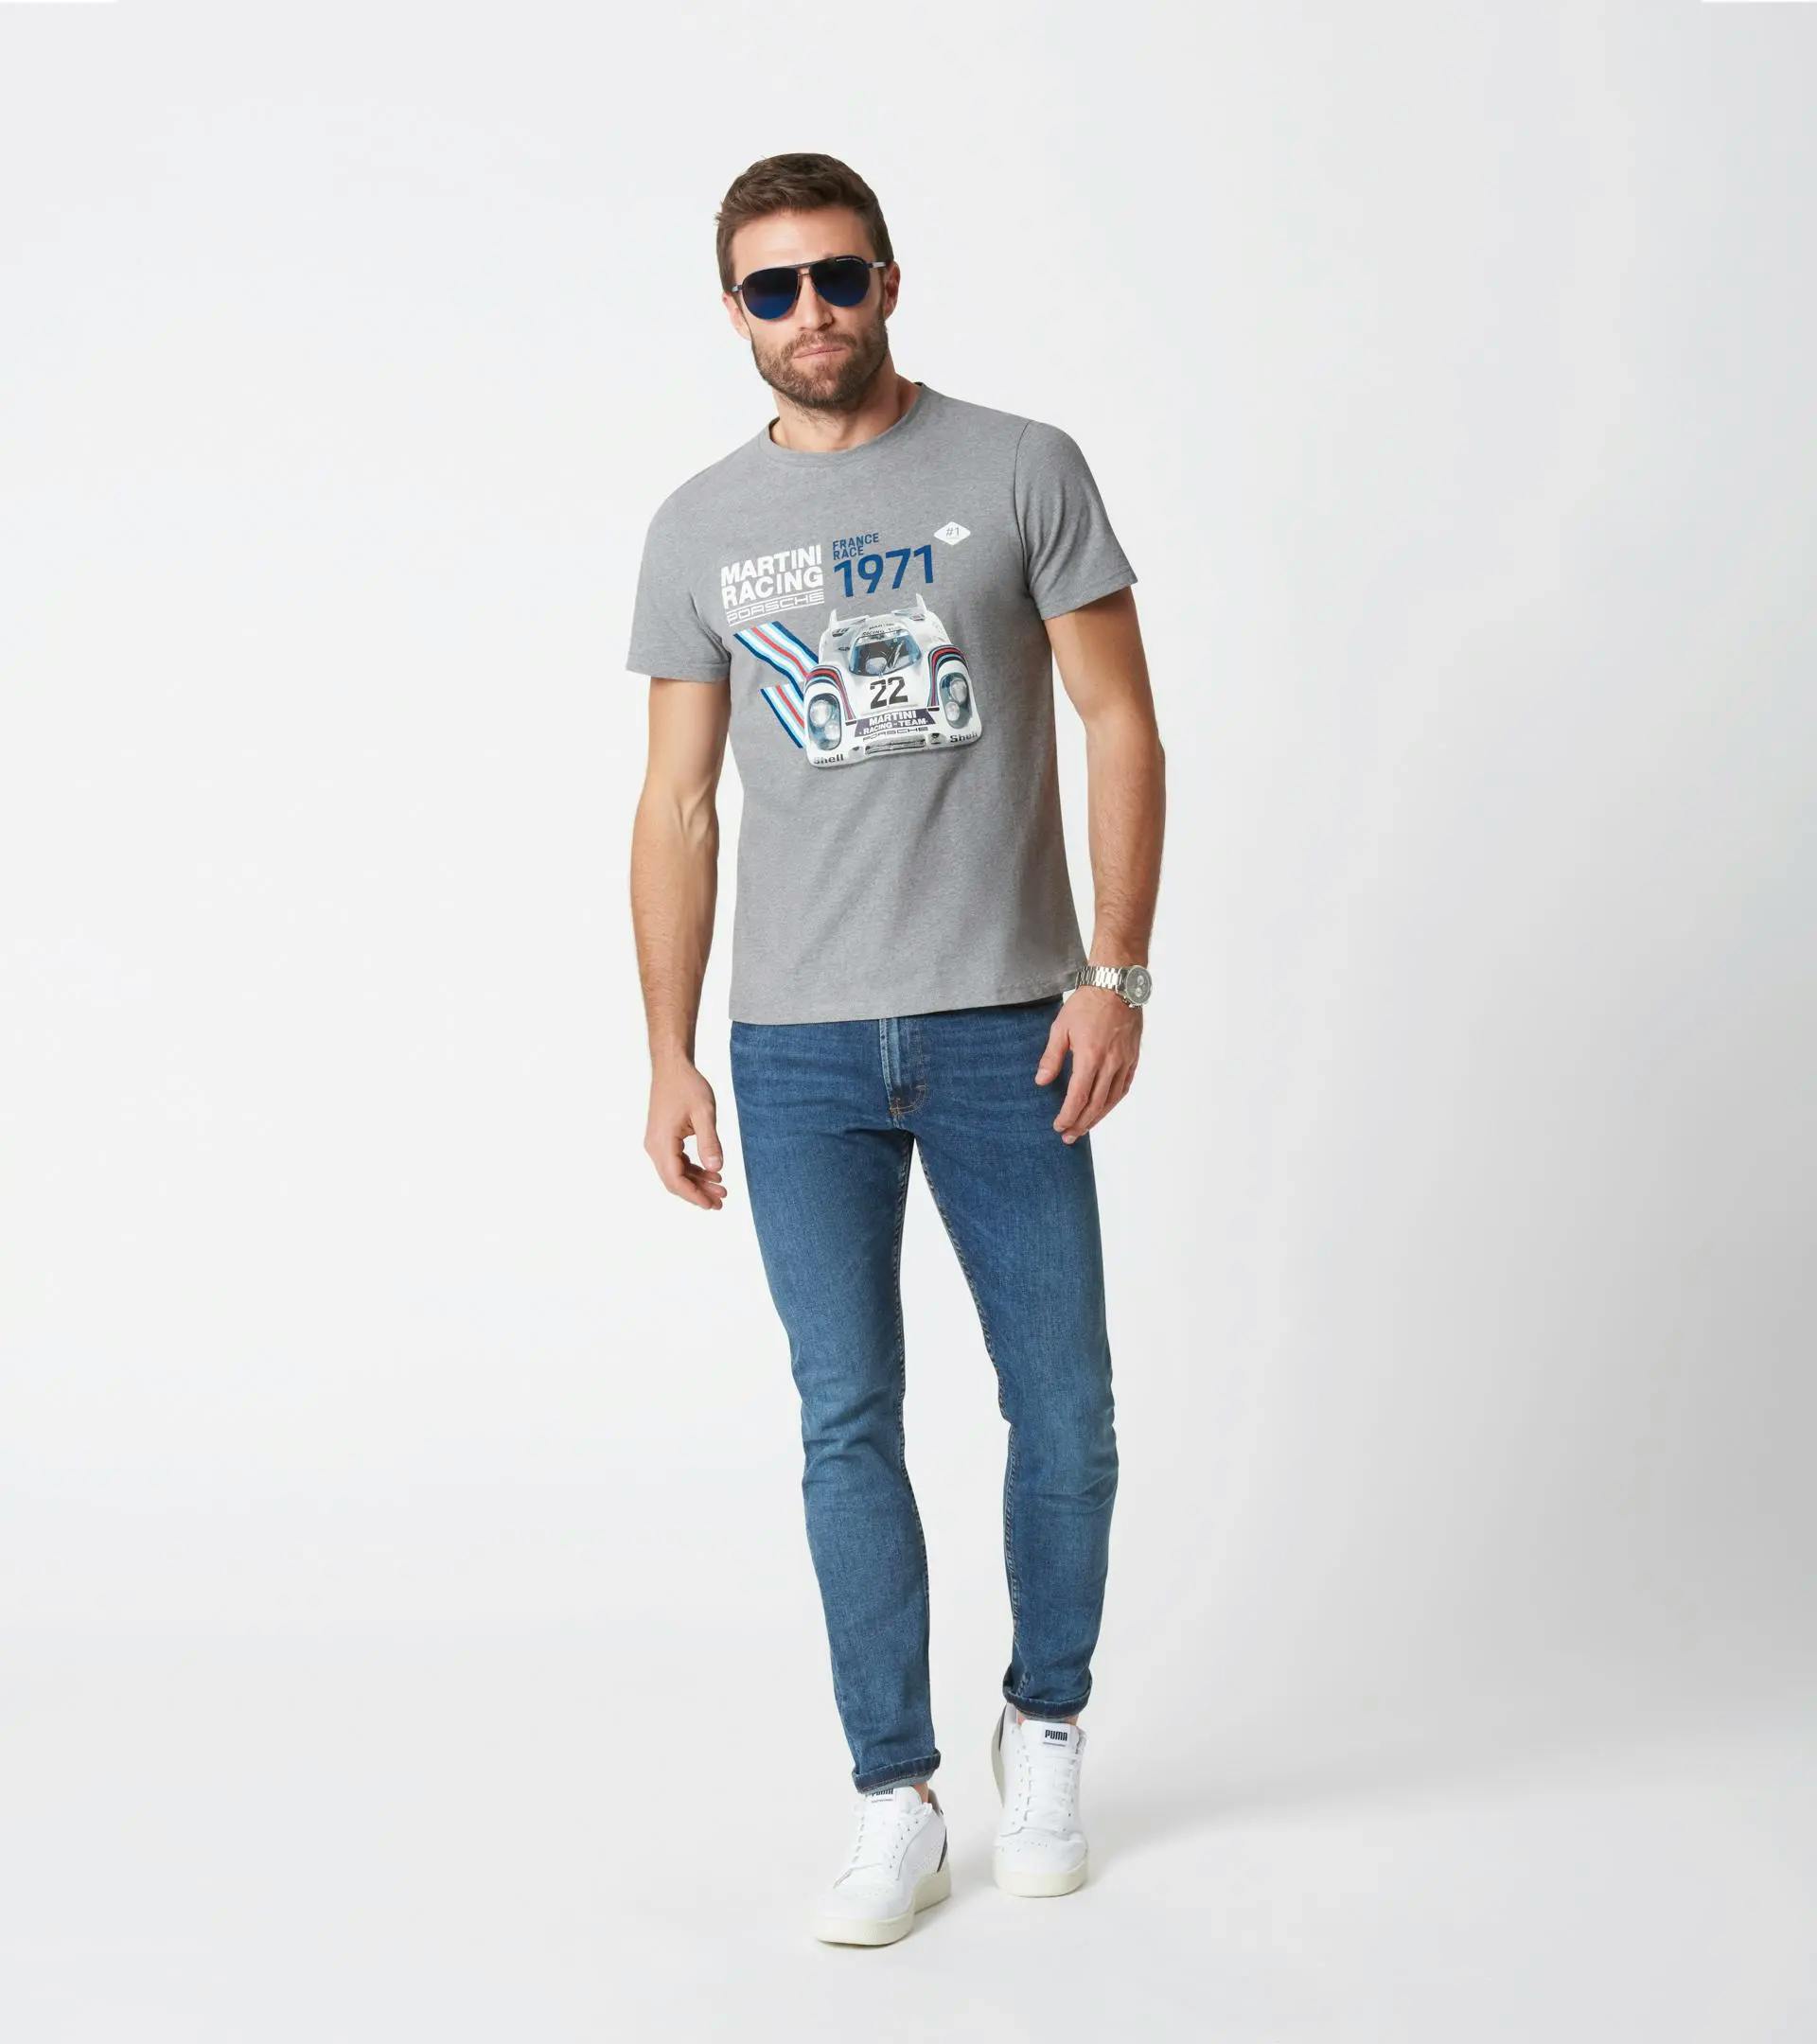 Collector's T-Shirt n. 20 unisex – MARTINI RACING® – Ltd. 6